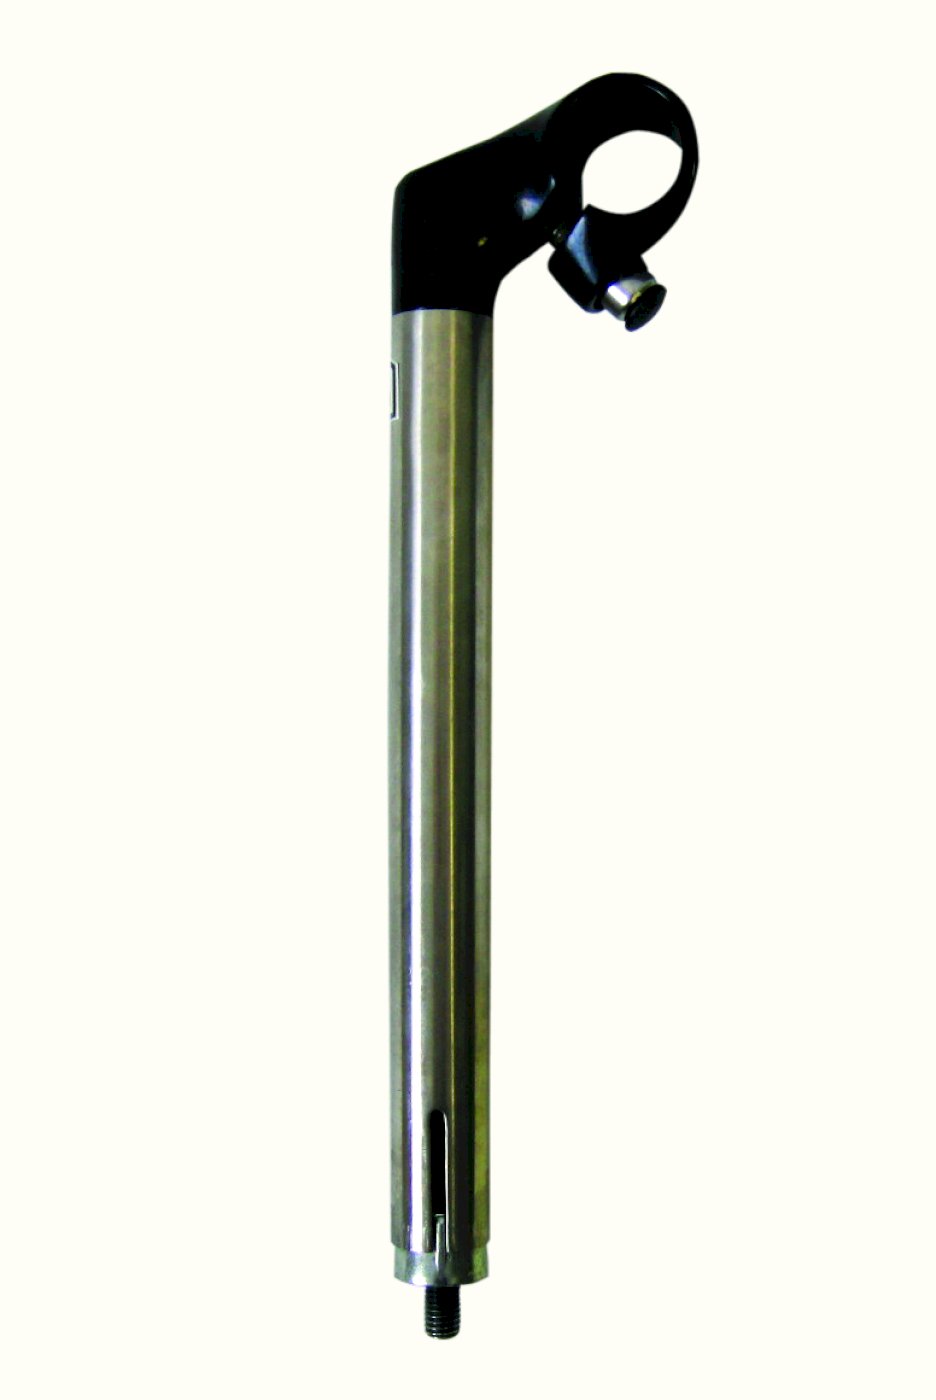 ergotec Lenkervorbau CAT Edelstahl Schaftdurchmesser 22,2 mm